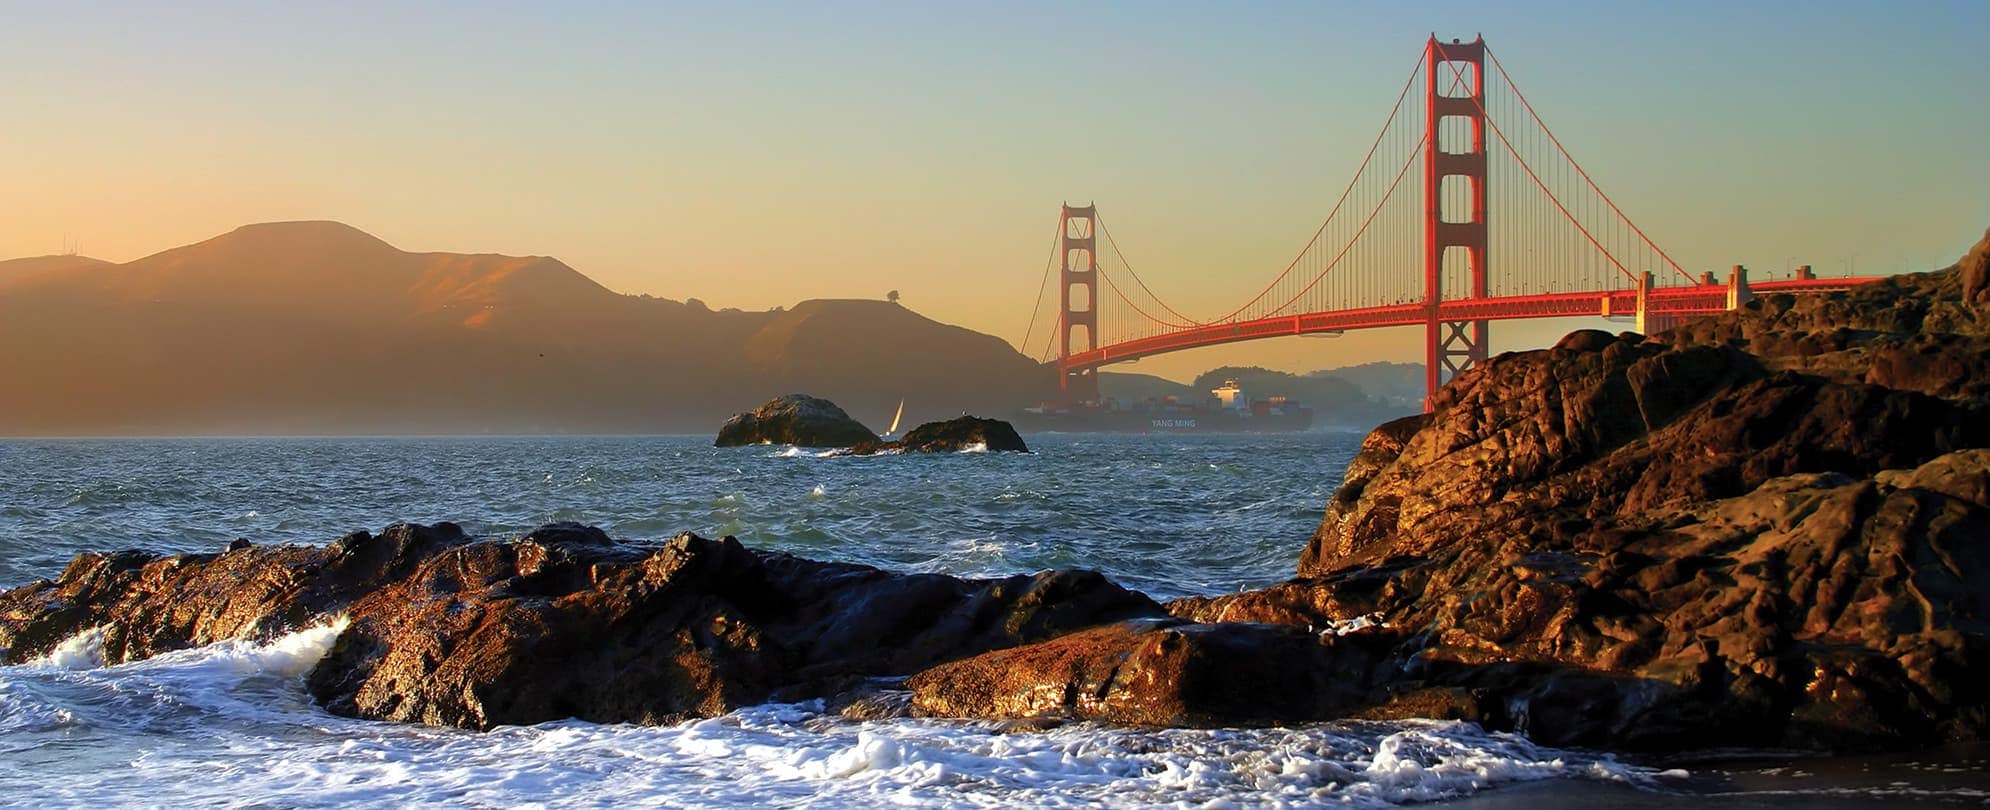 Rocks in the water in front of the Golden Gate Bridge in San Francisco, California